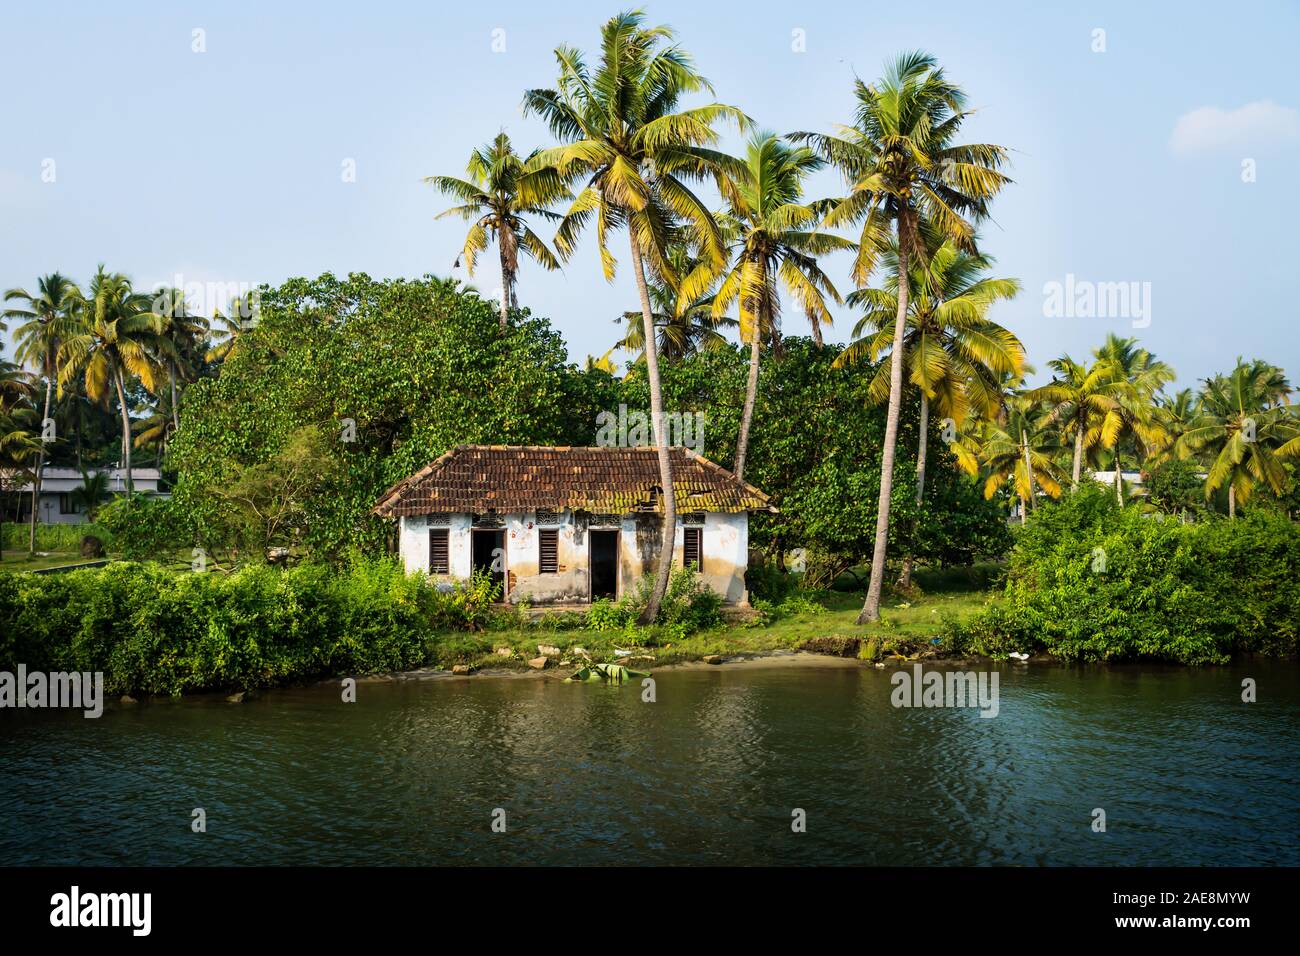 Abandoned house front view in the Kerala backwater with palm trees at Kollam Kottapuram Waterway, Kerala, India Stock Photo